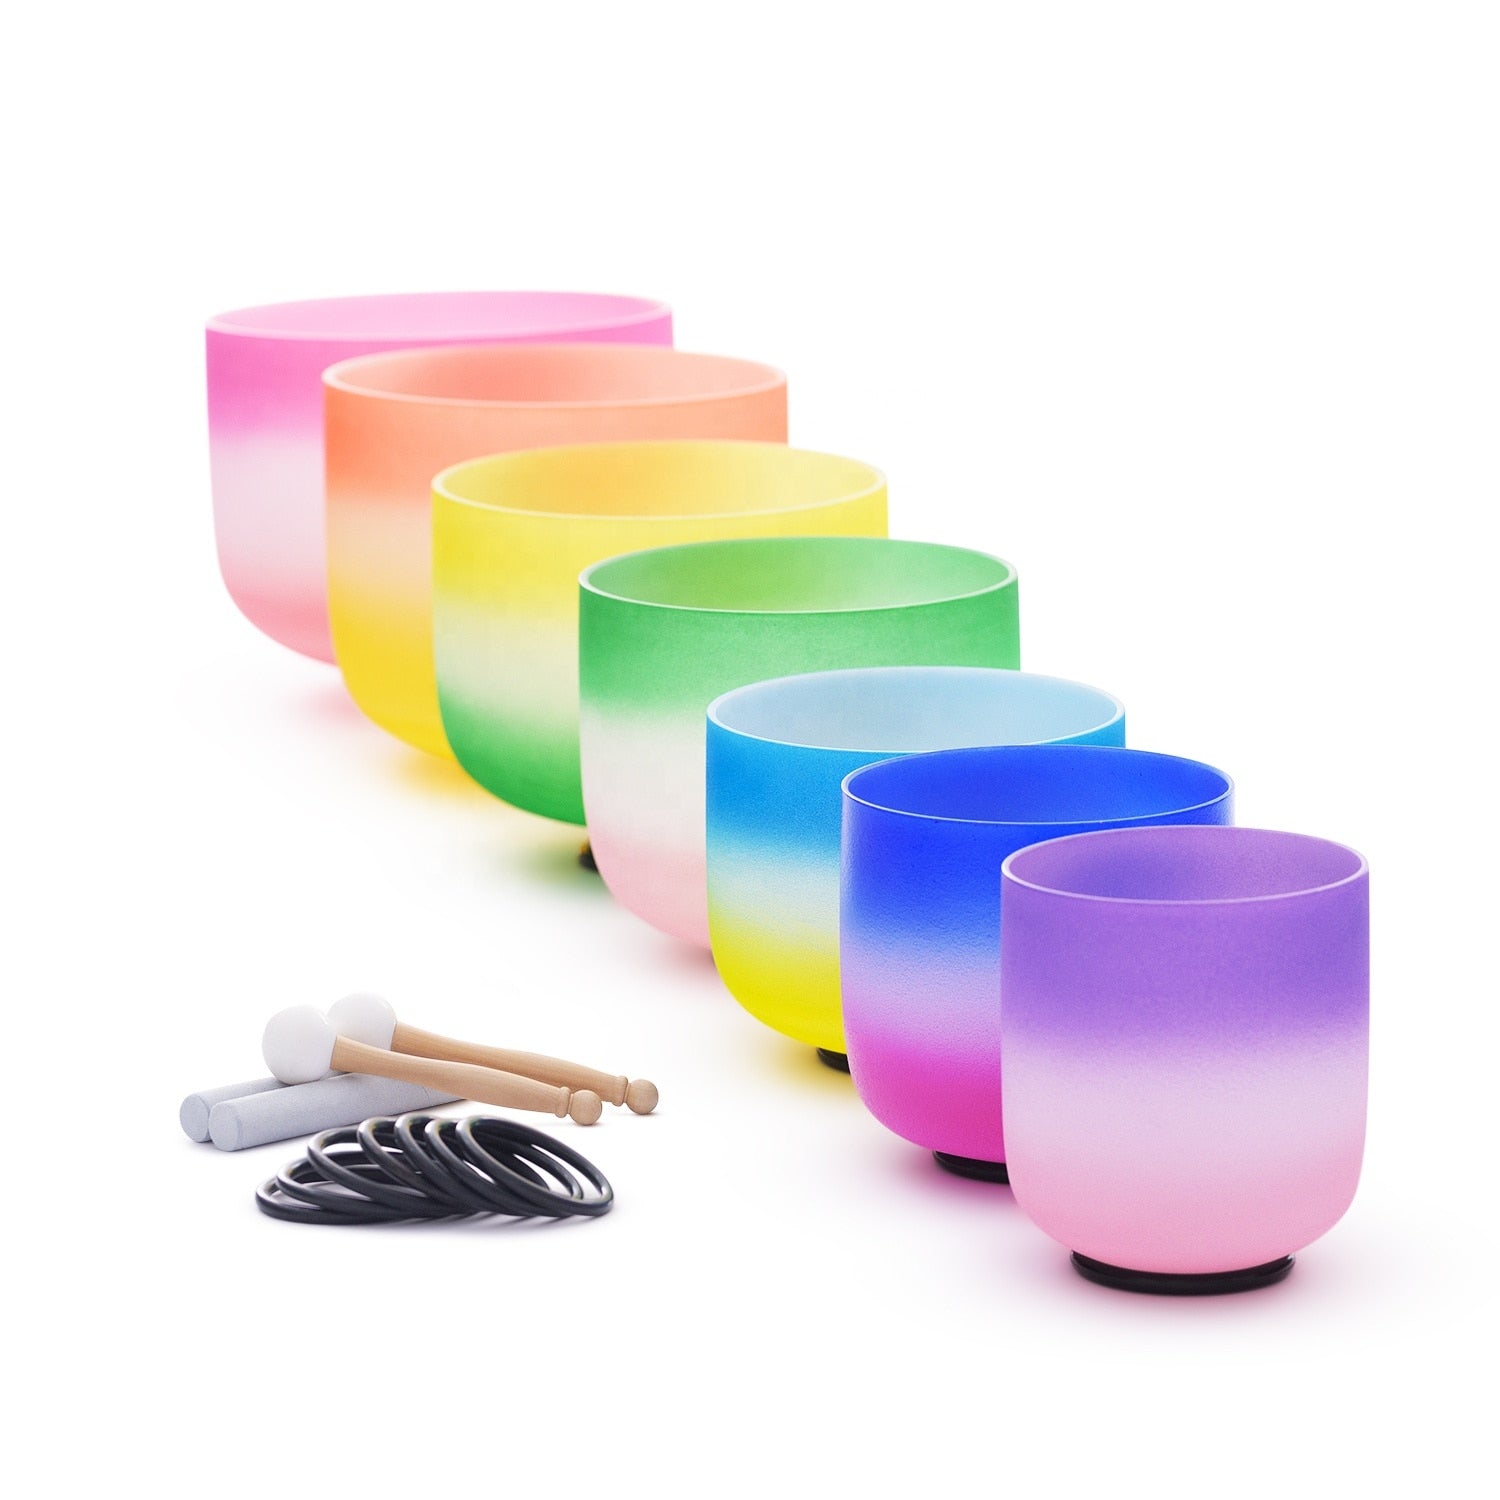 Chakra Note Set of 7pcs CDEFGAB Rainbow Frosted Quartz Crystal Singing Bowl With 2PCS Free Case - DITCHWORLD